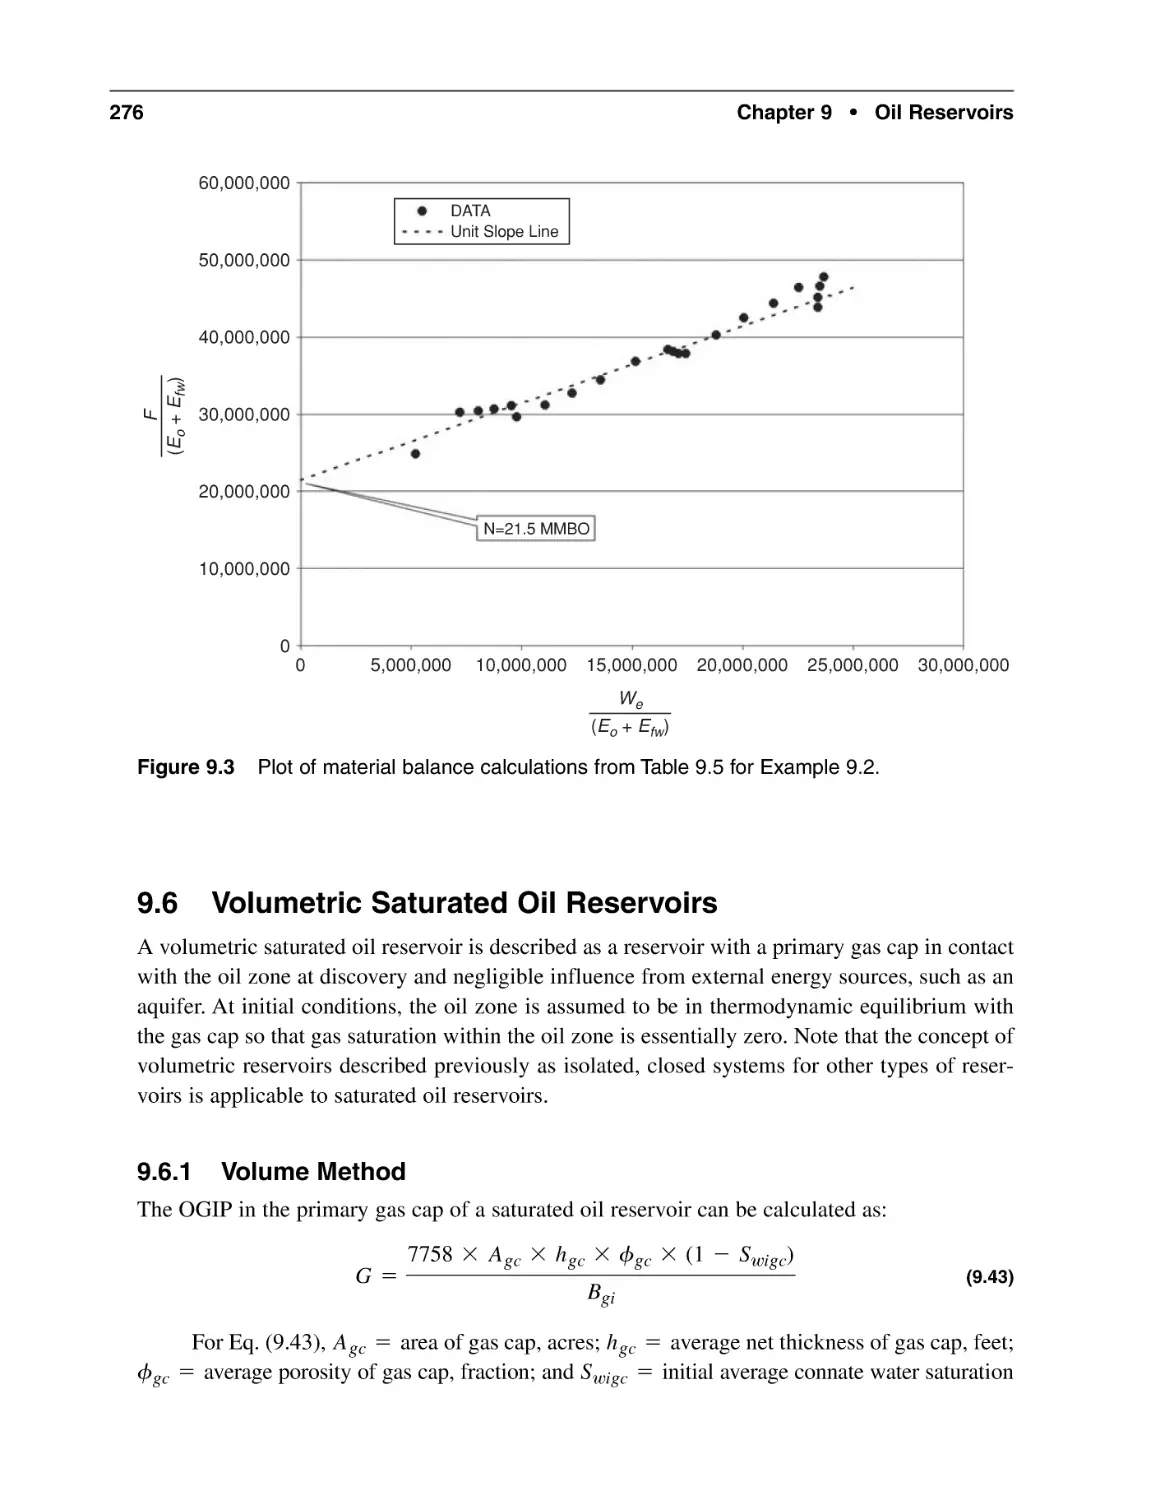 9.6 Volumetric Saturated Oil Reservoirs
9.6.1 Volume Method